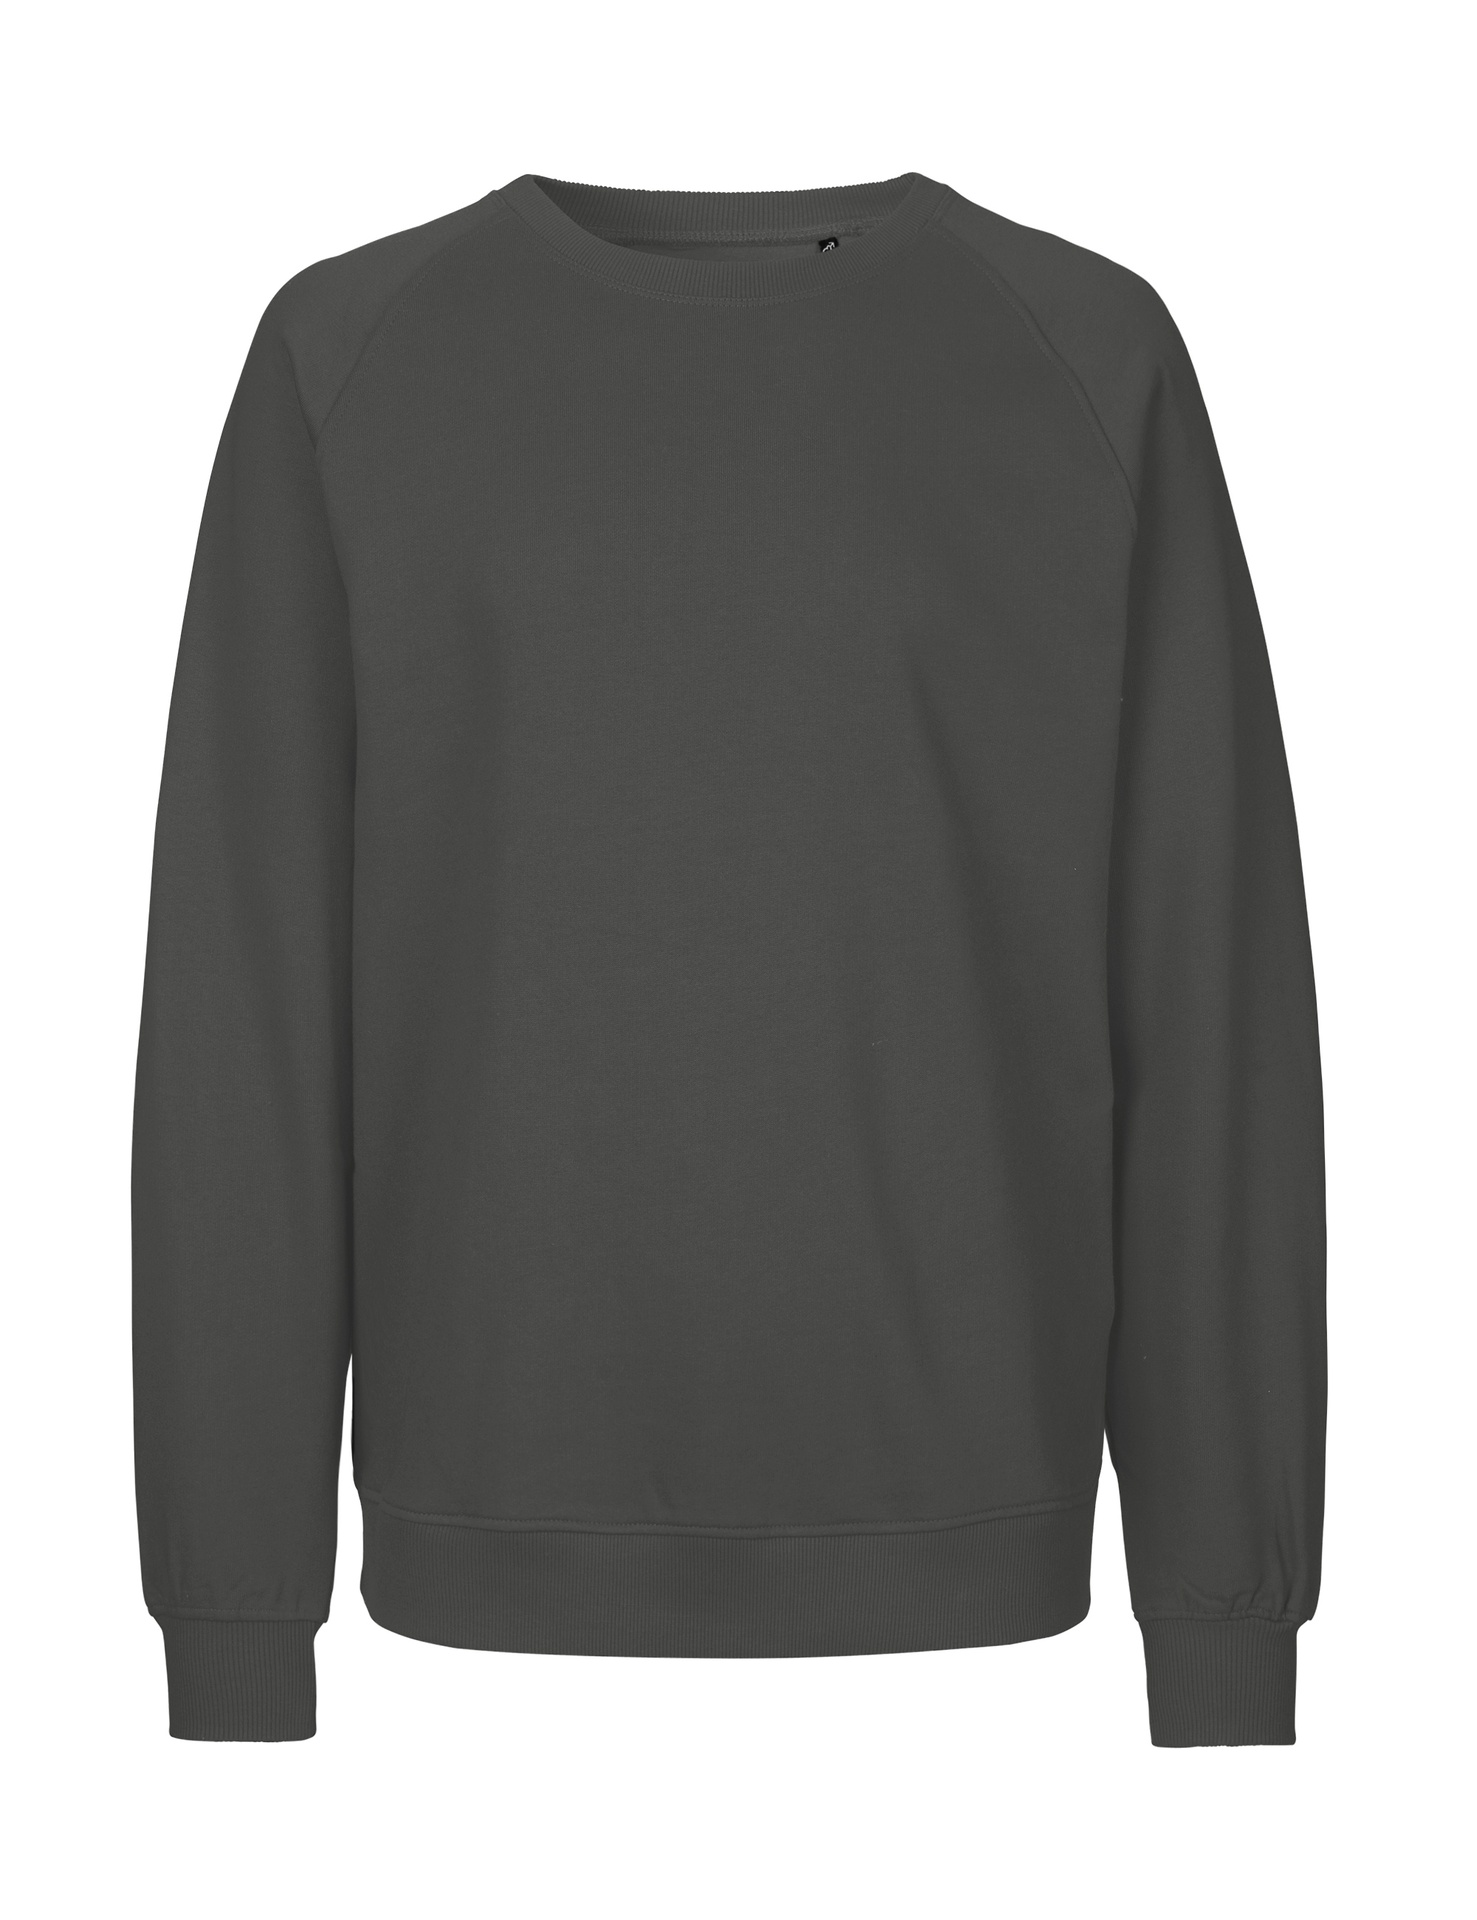 [PR/02694] Unisex Sweatshirt (Charcoal 06, 3XL)